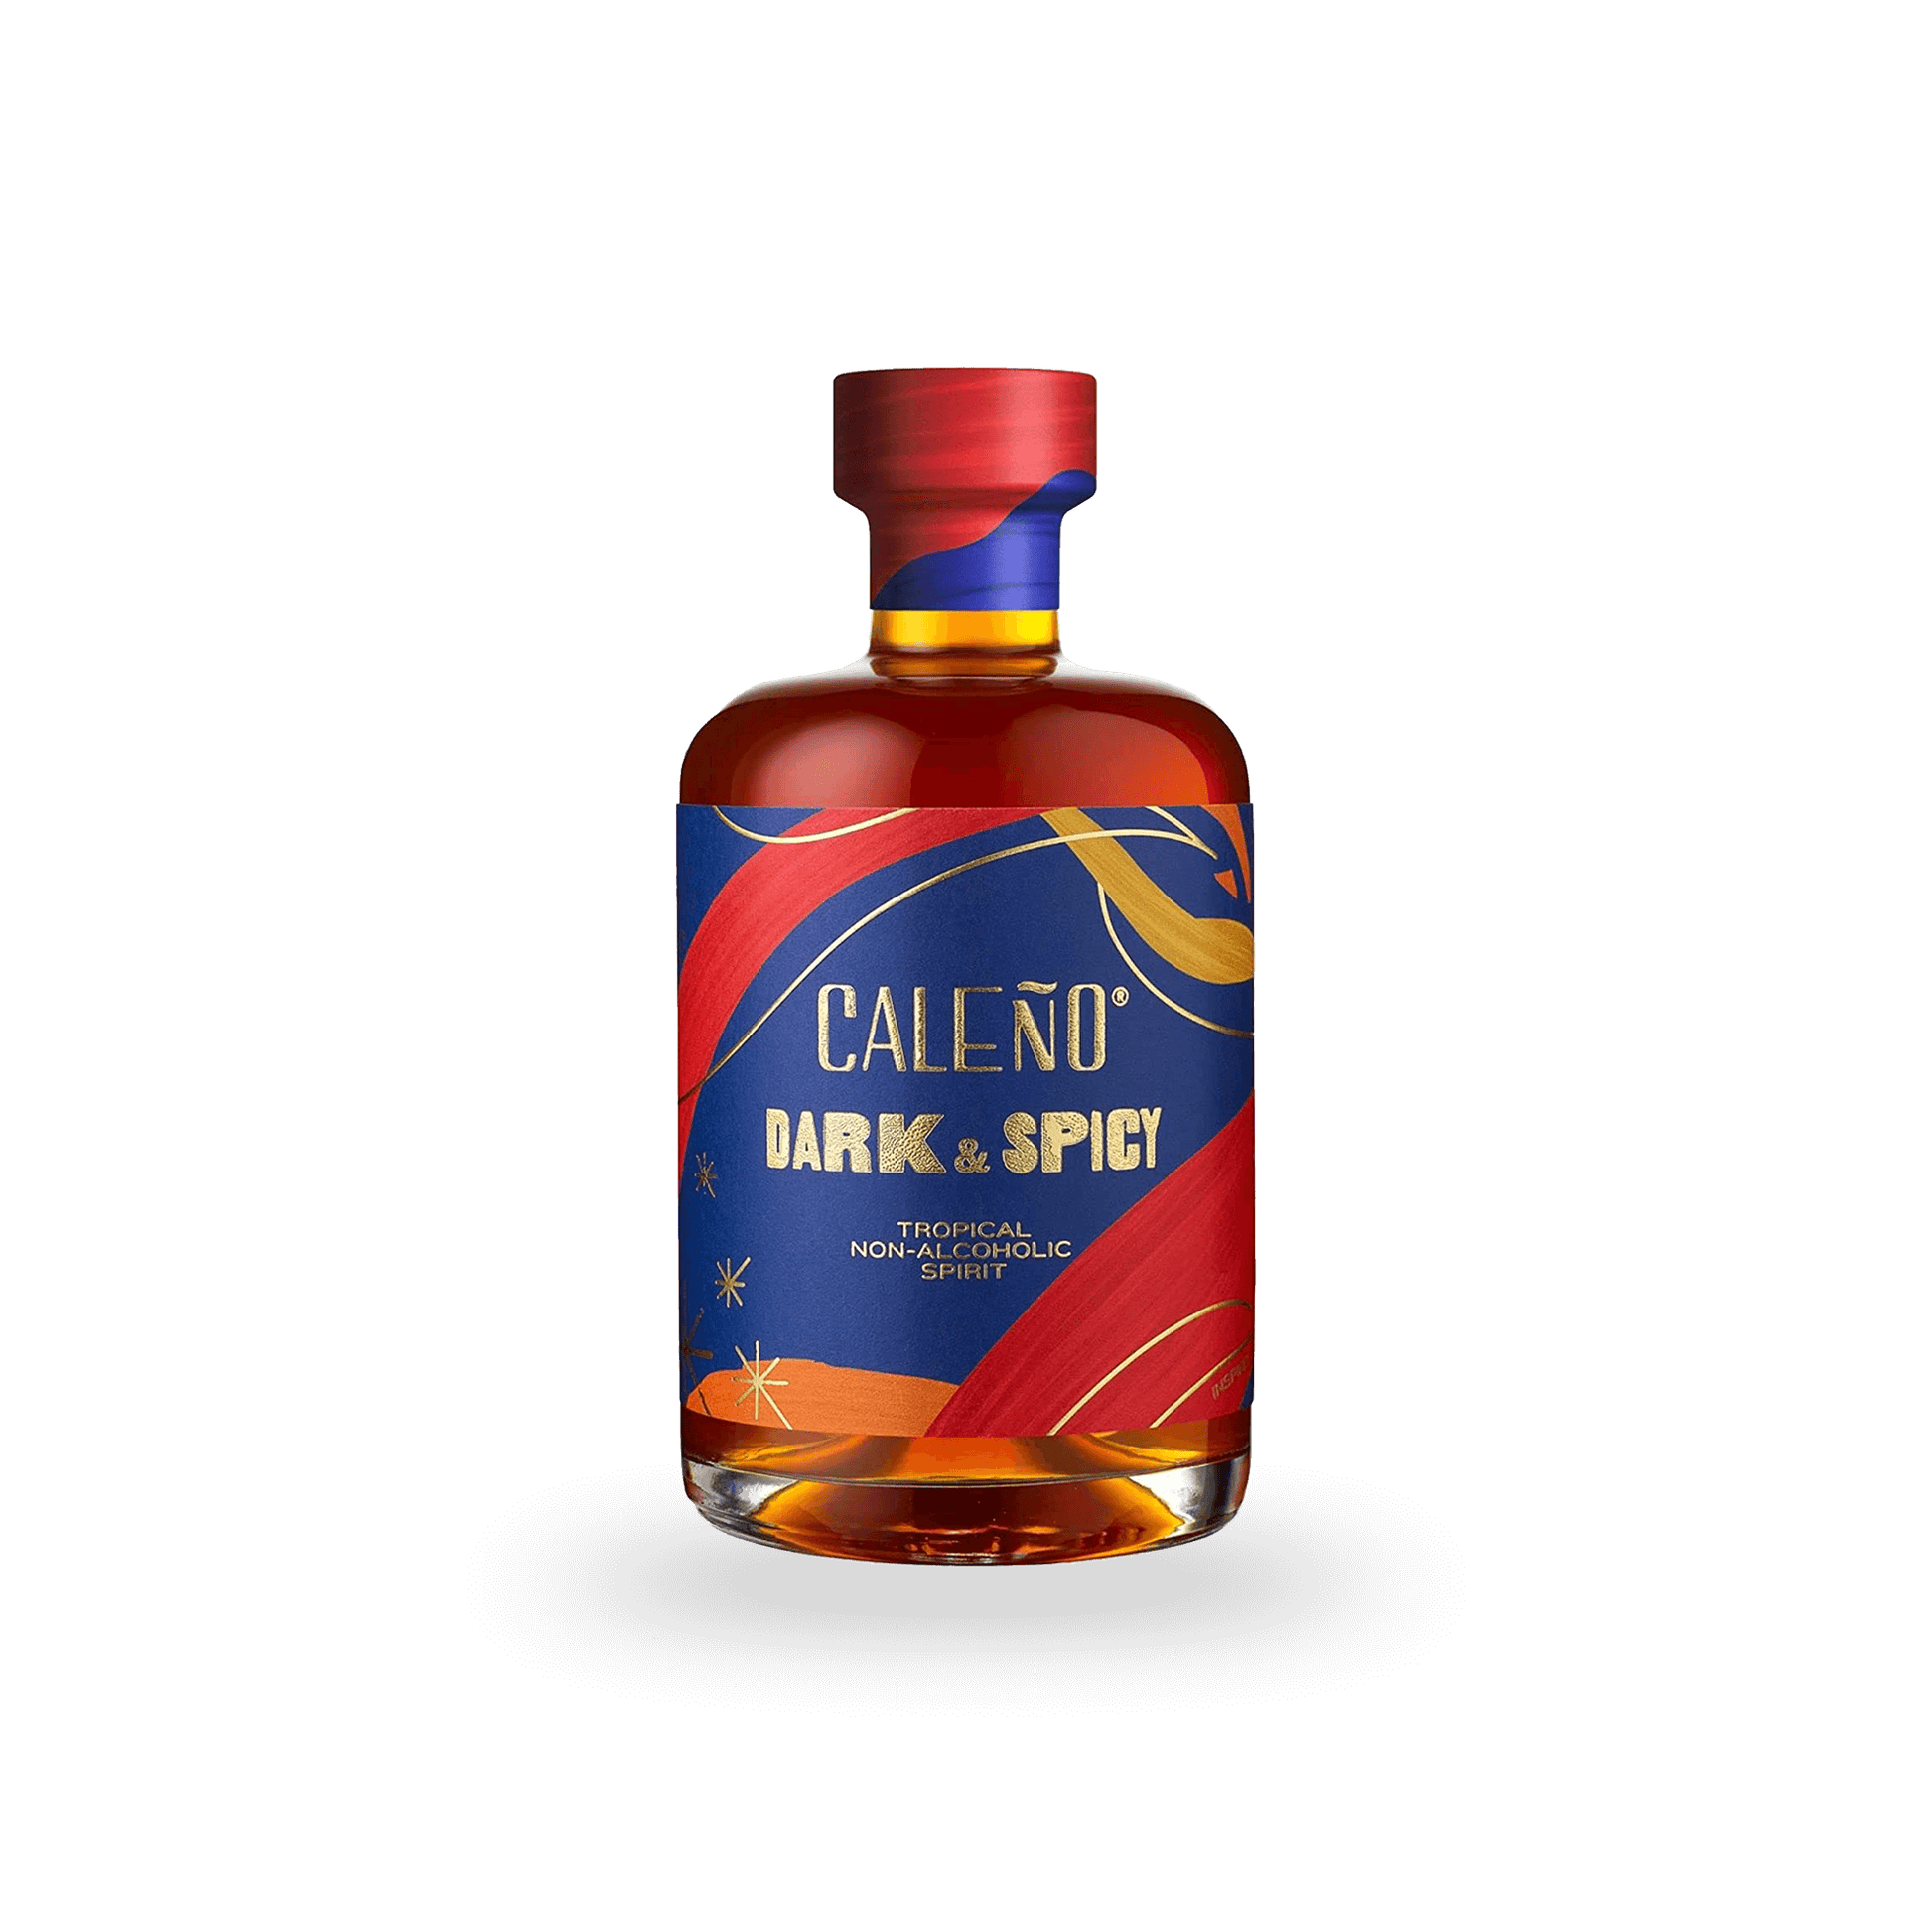 Caleno Dark & Spicy Non-Alcoholic Tropical Rum Bottle